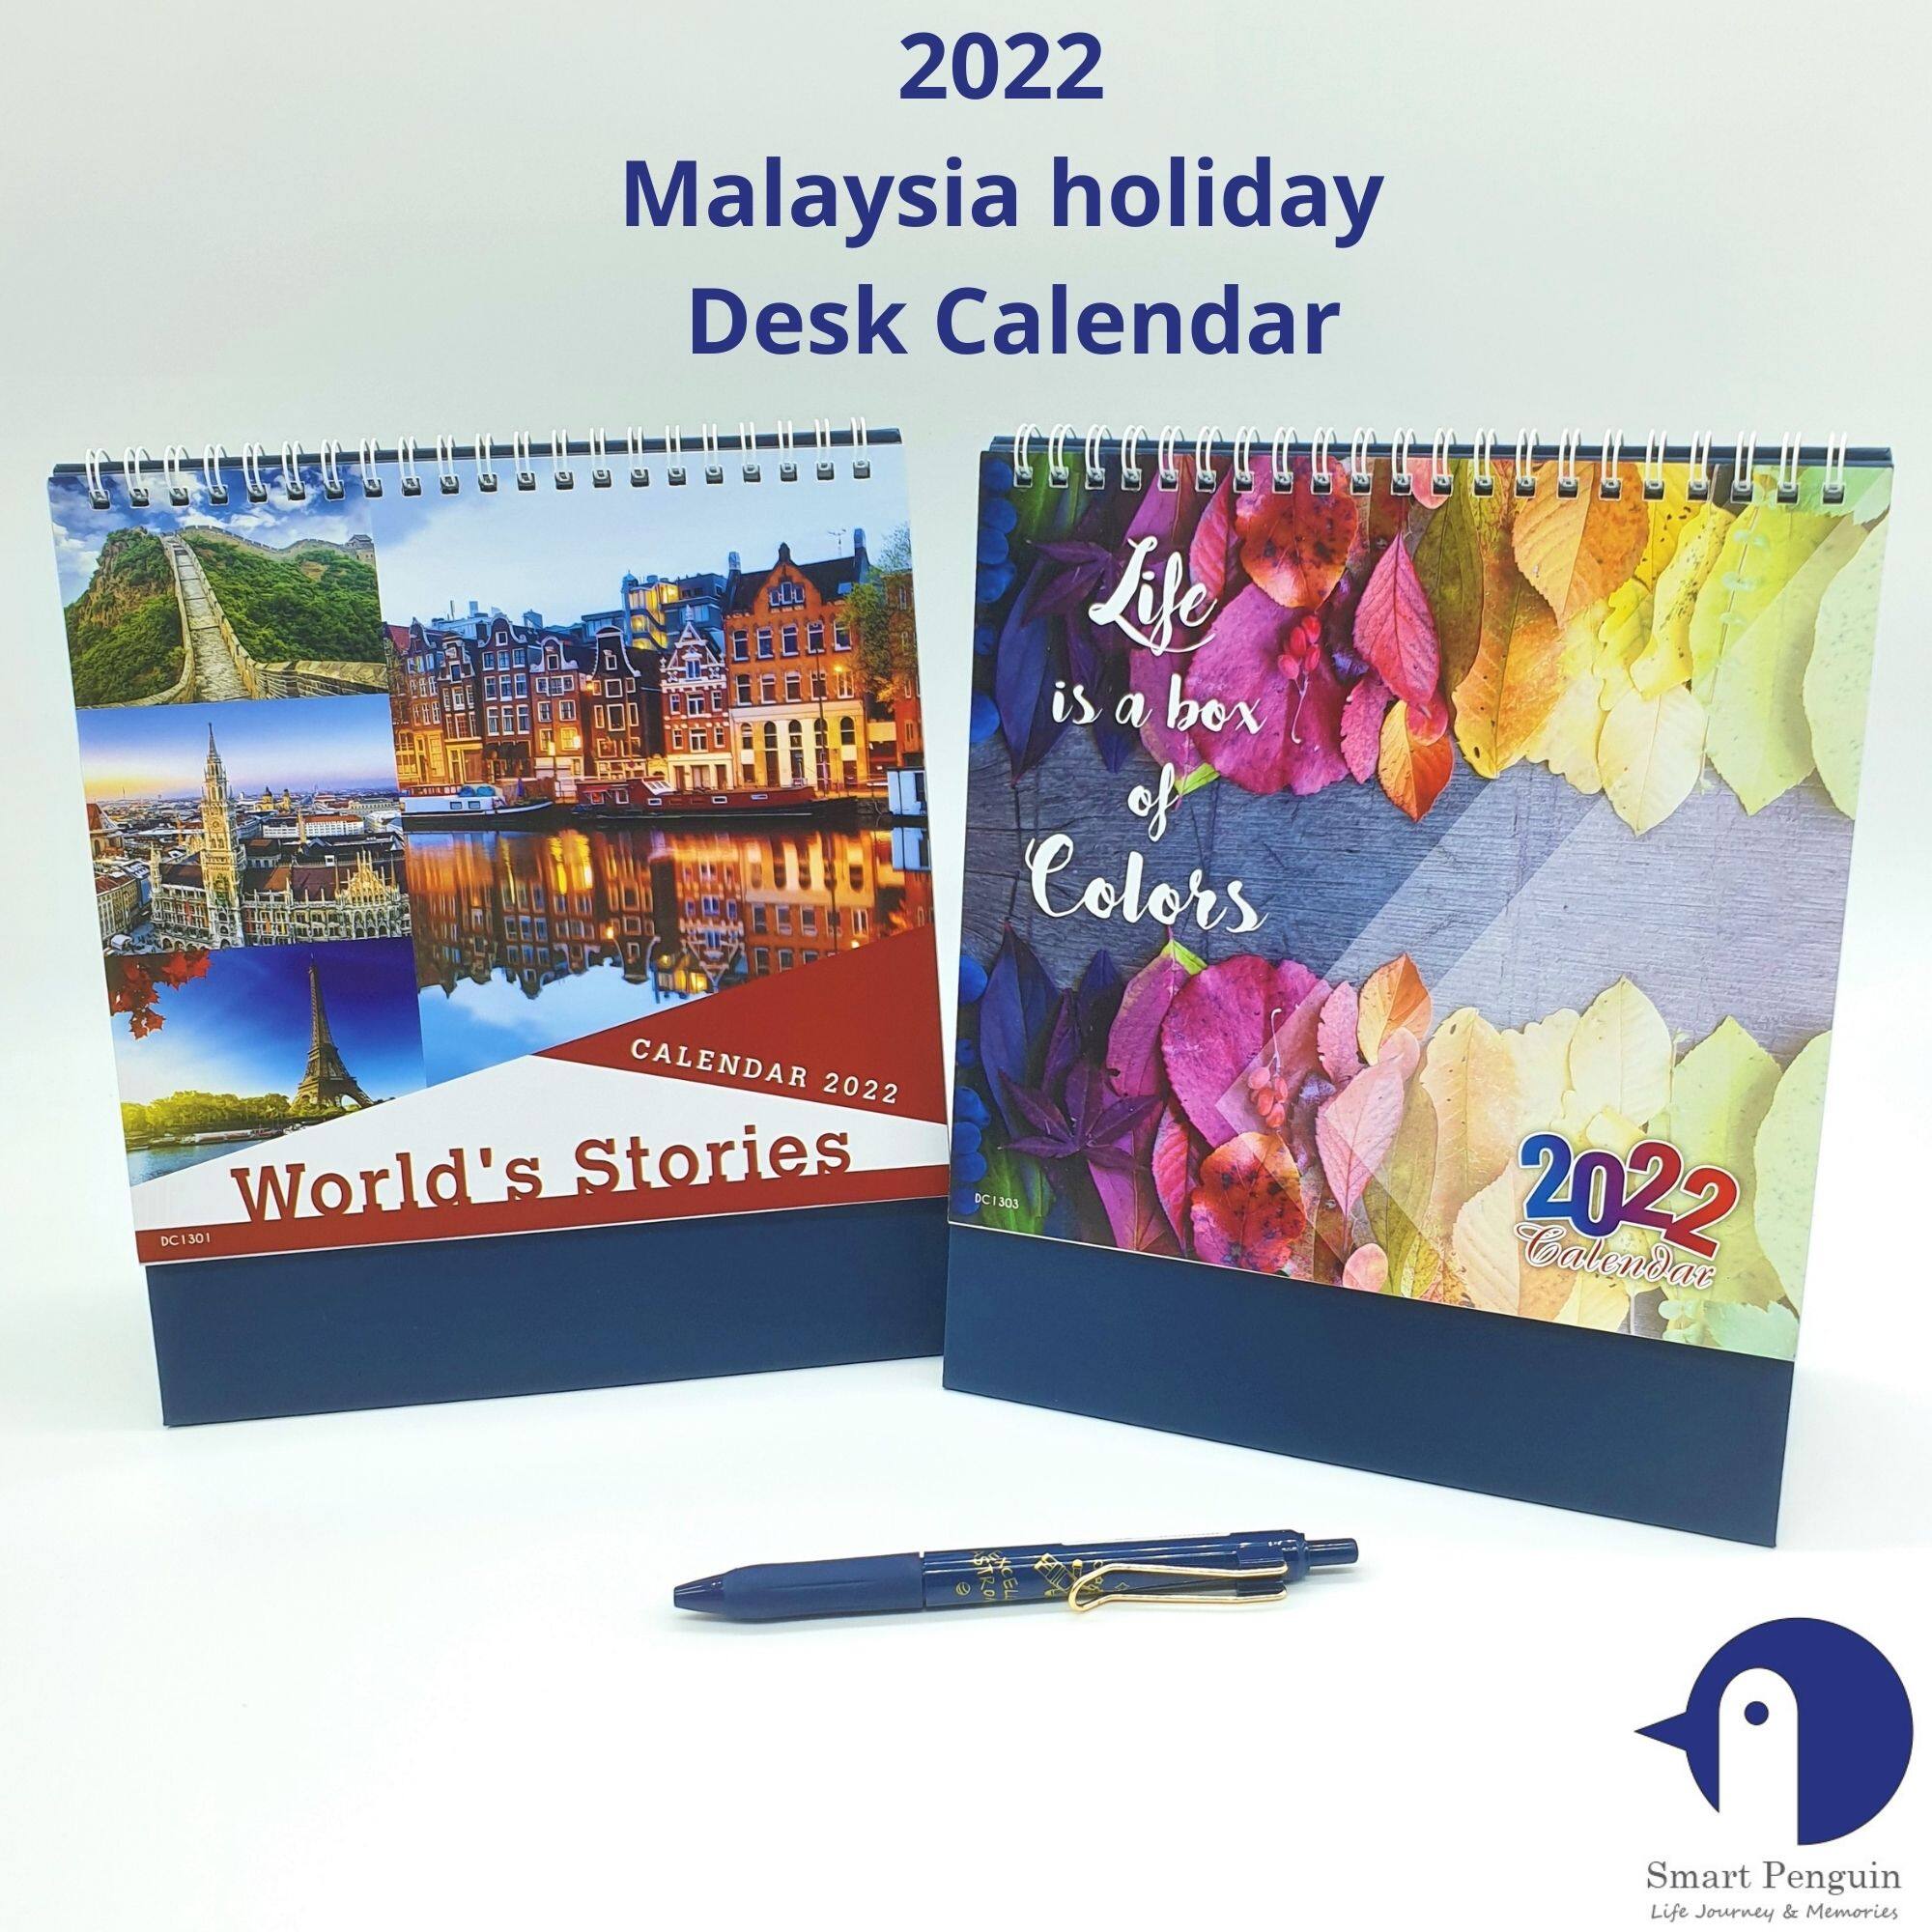 2022 calendar malaysia public holiday